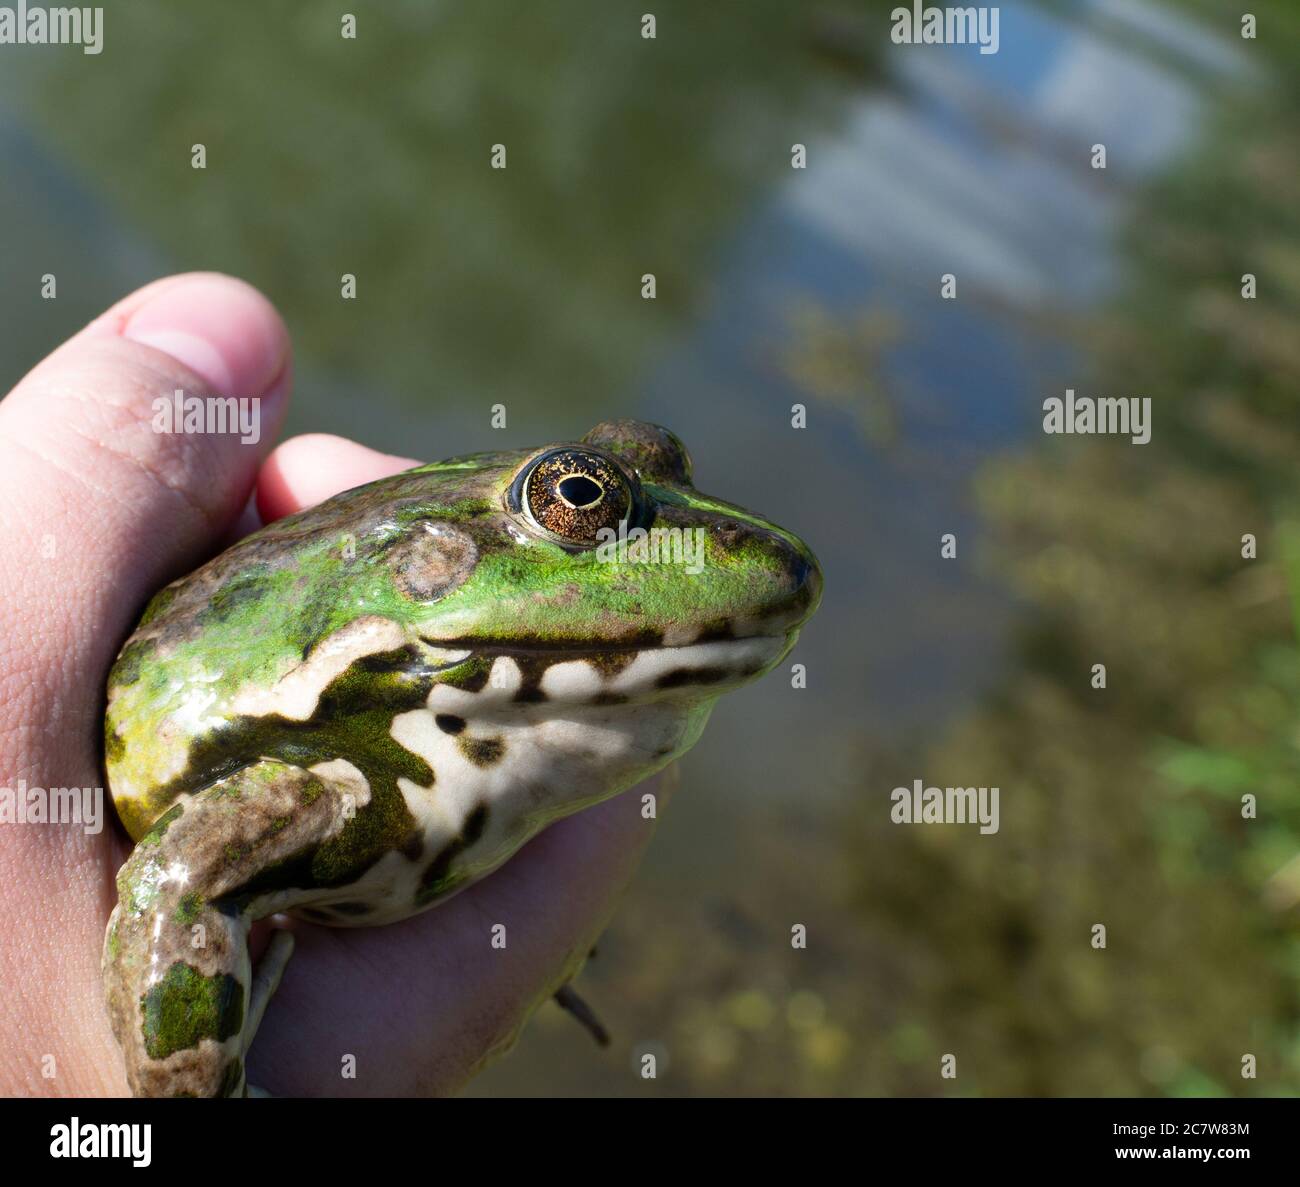 Catturato rana di lago in mano, specie Pelophylax ridibundus, femmina, la più grande rana in Russia Foto Stock